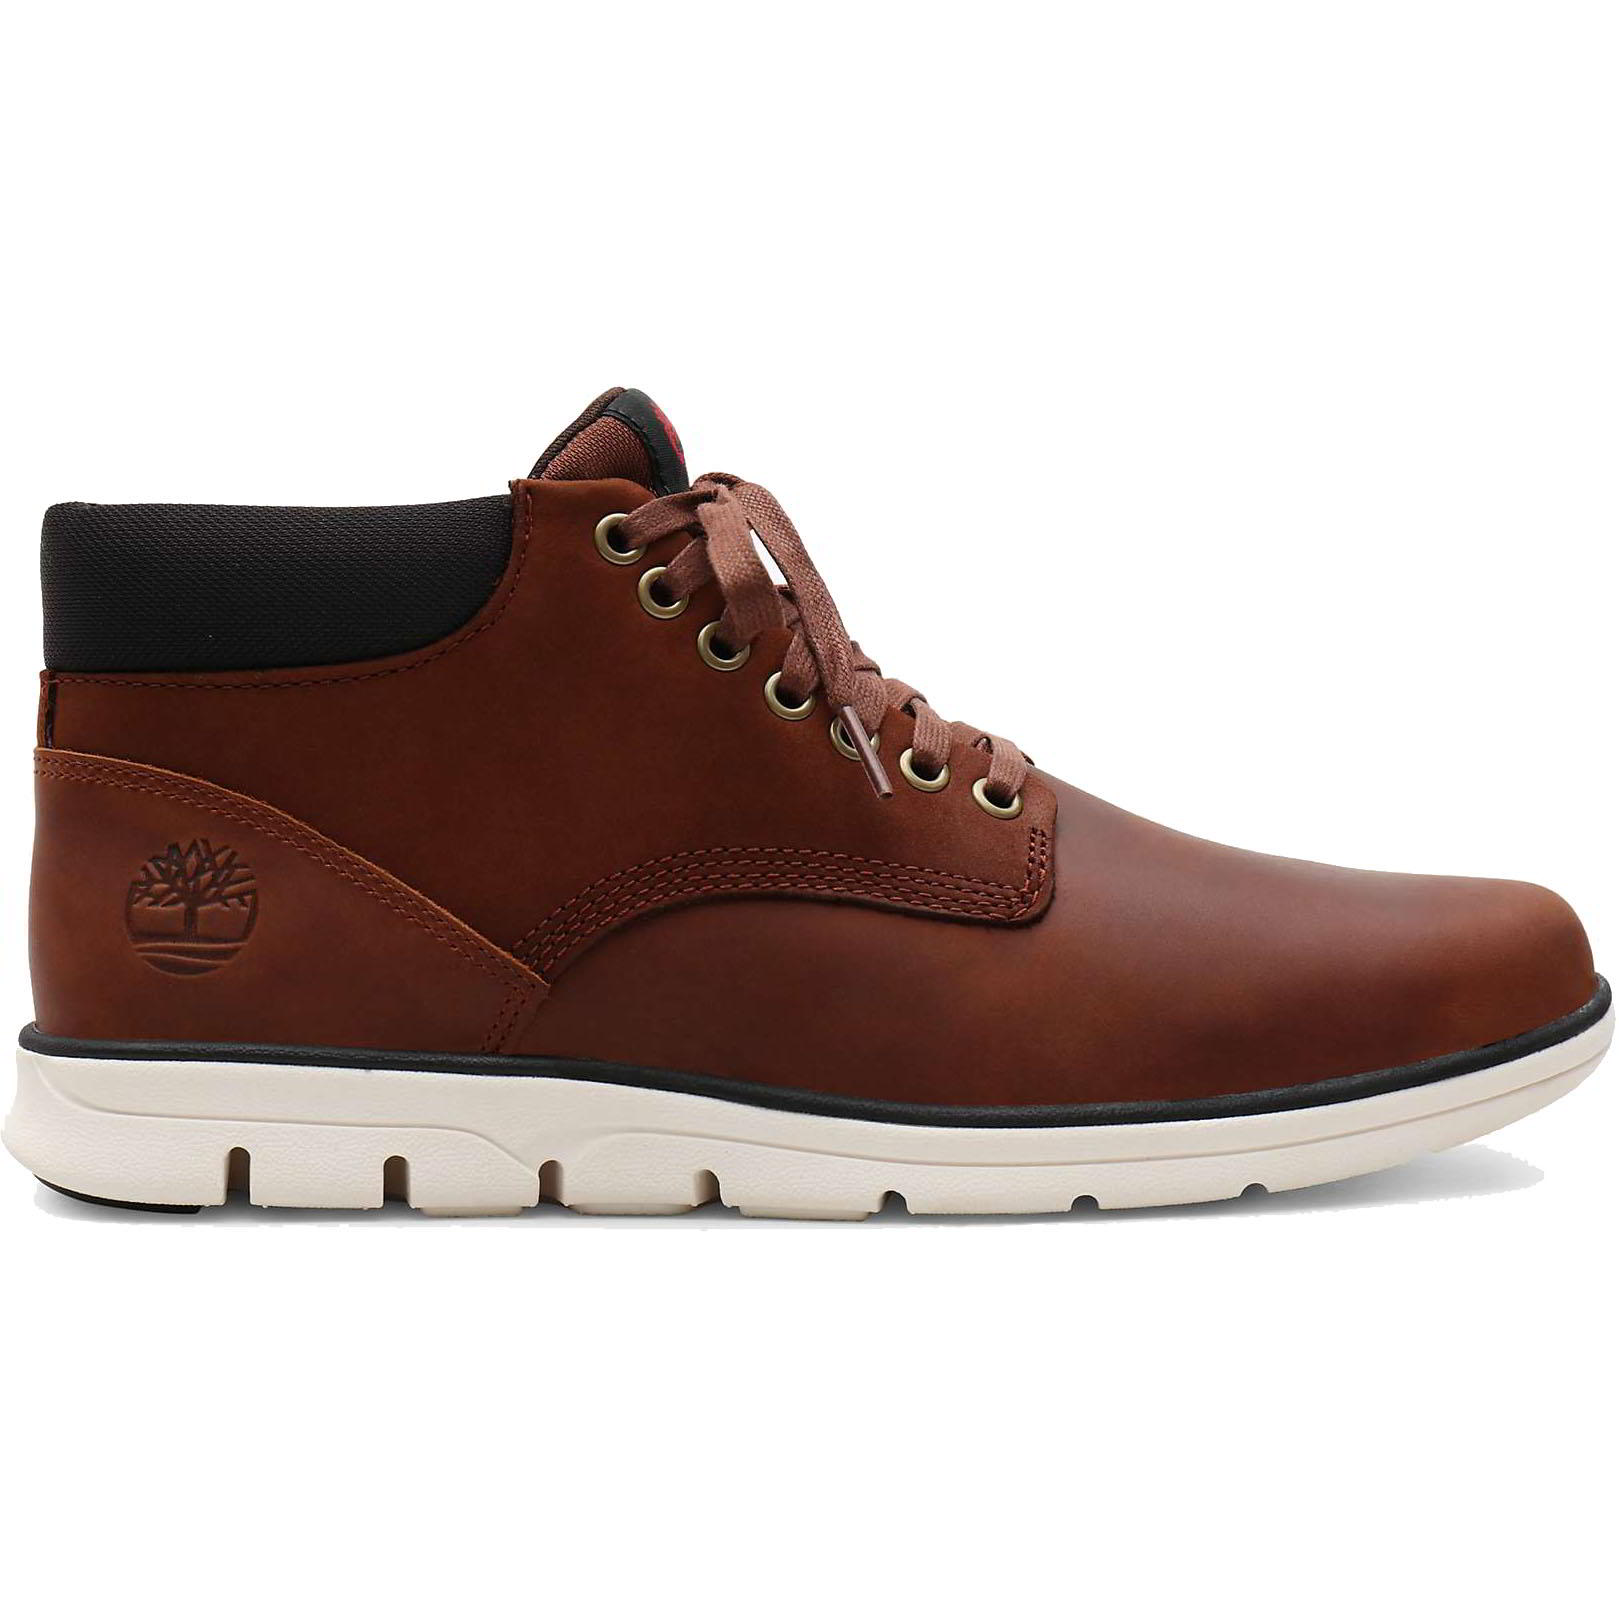 Timberland Men's Bradstreet Chukka Leather Ankle Boots - UK 11